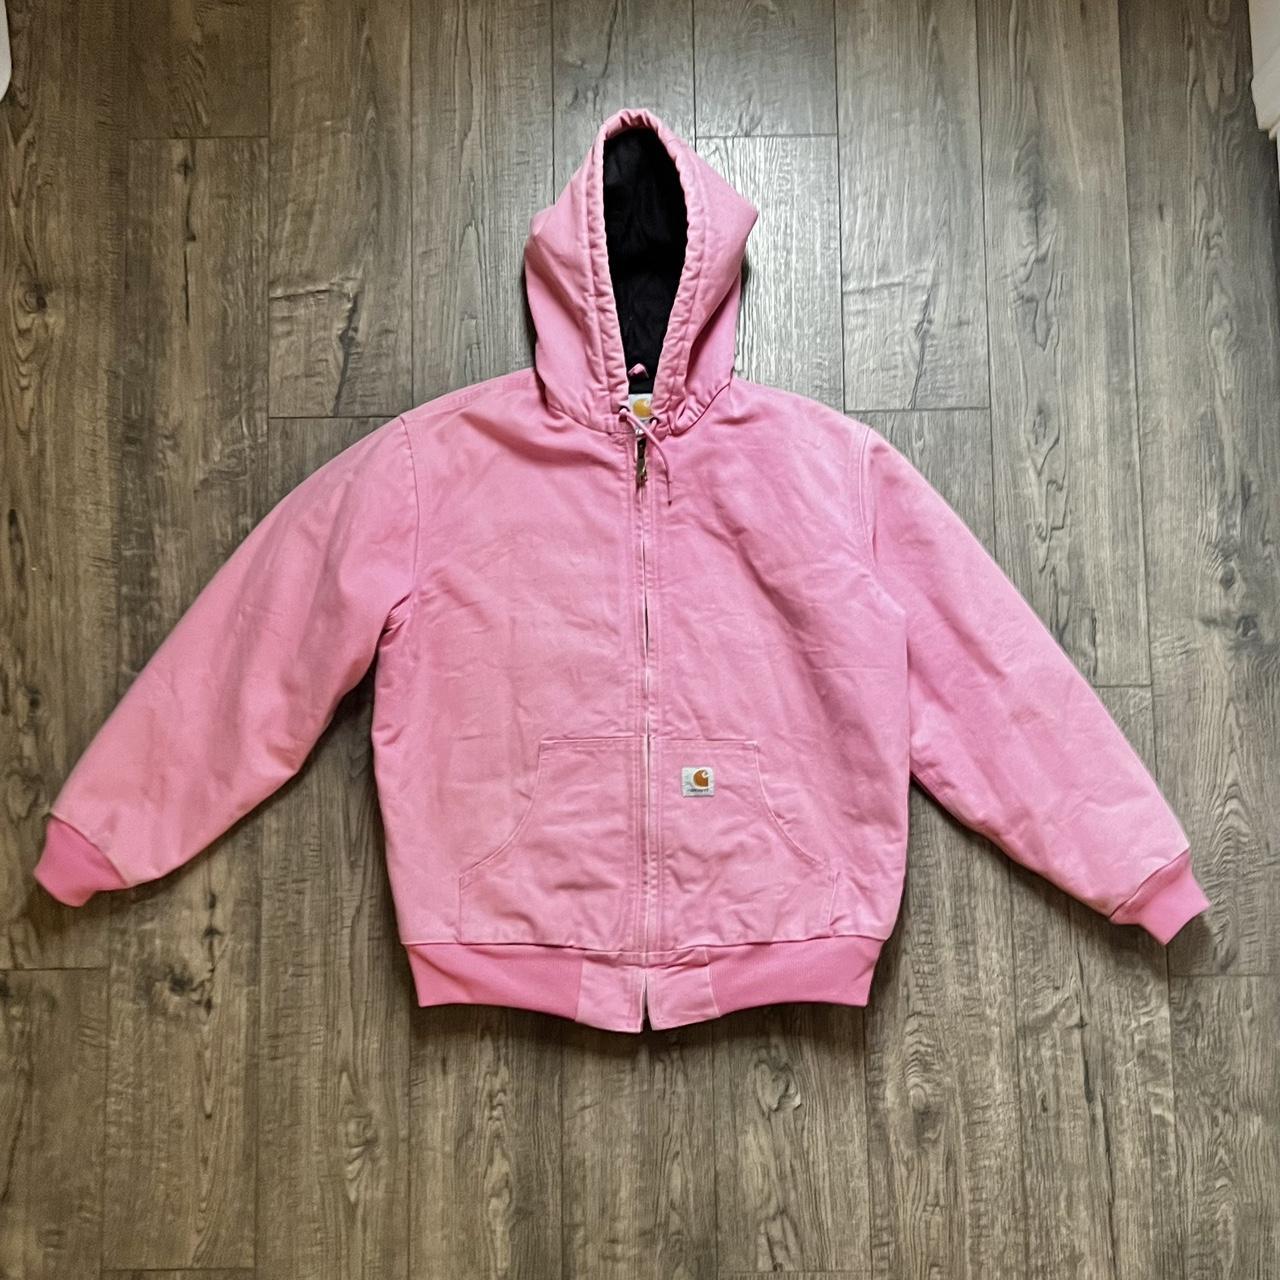 Vintage Pink Carhartt Jacket! This style is... - Depop